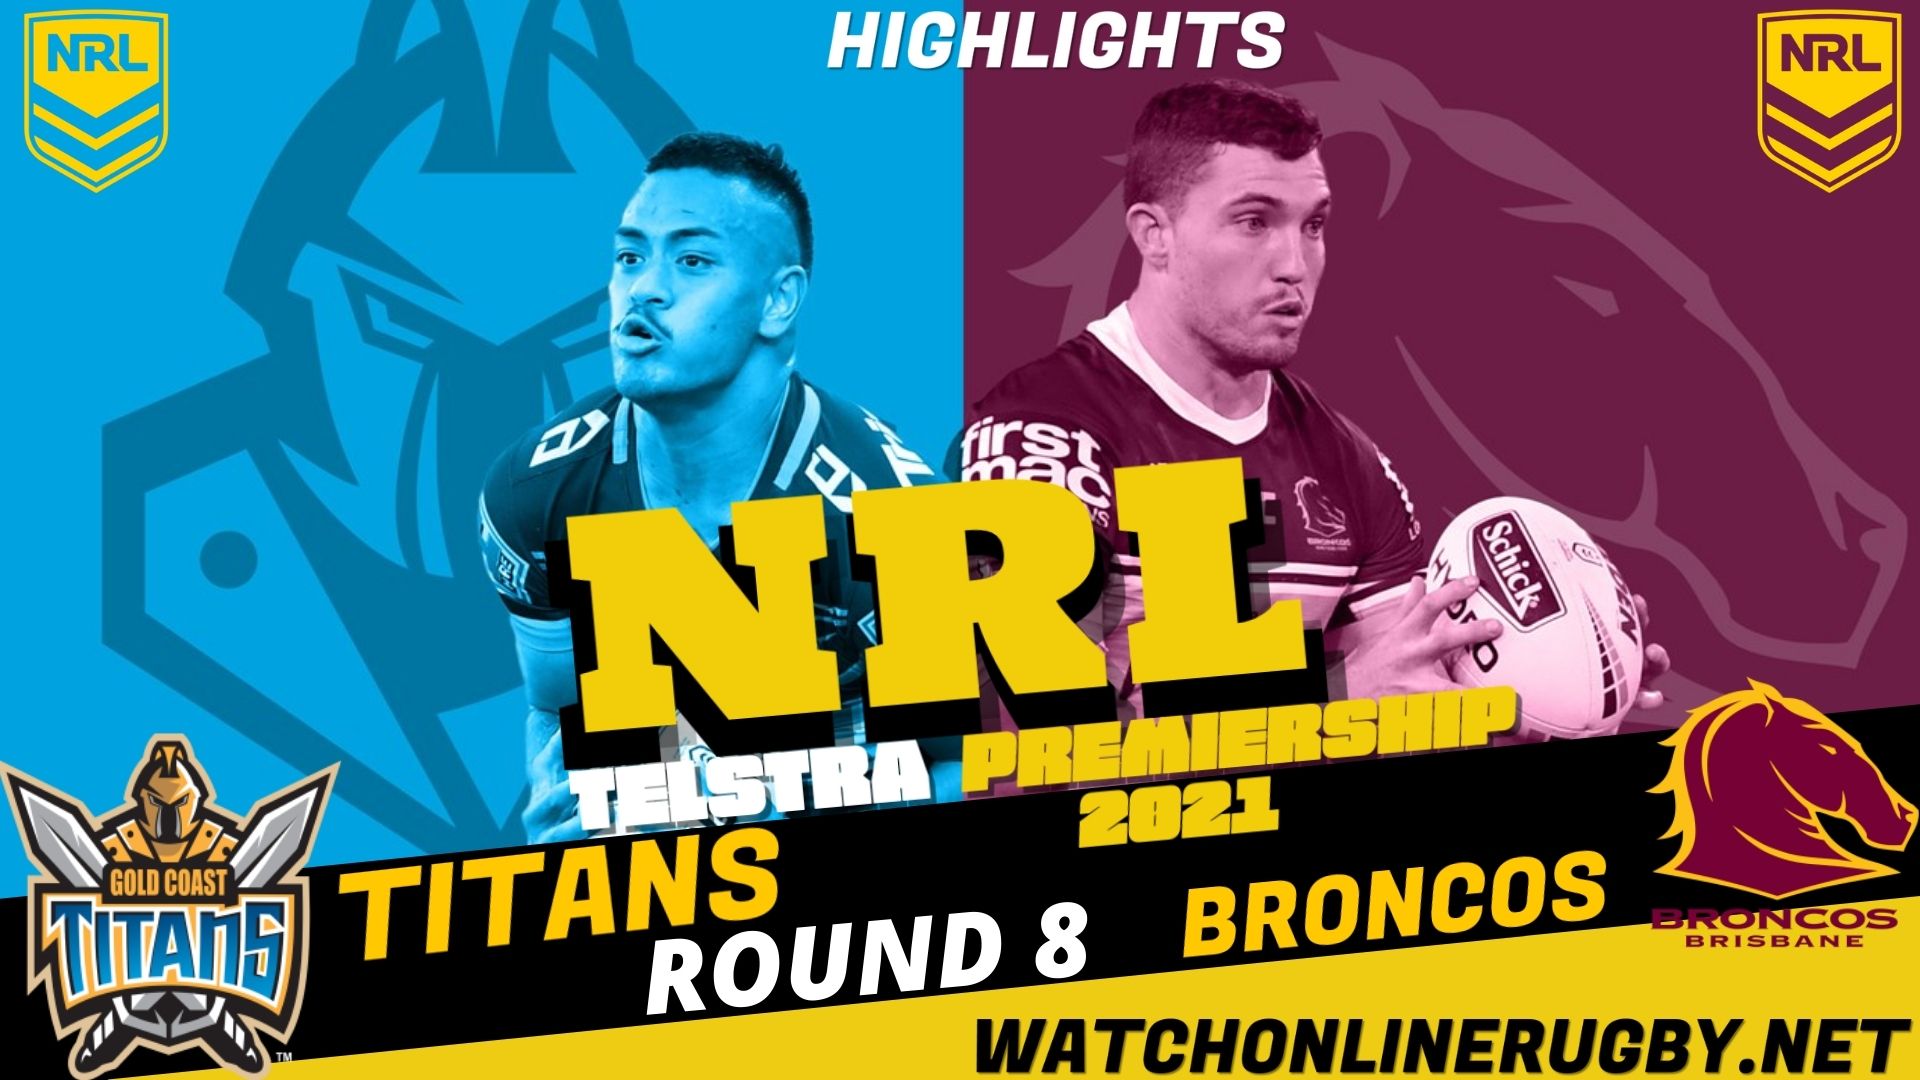 Broncos Vs Titans Highlights RD 8 NRL Rugby